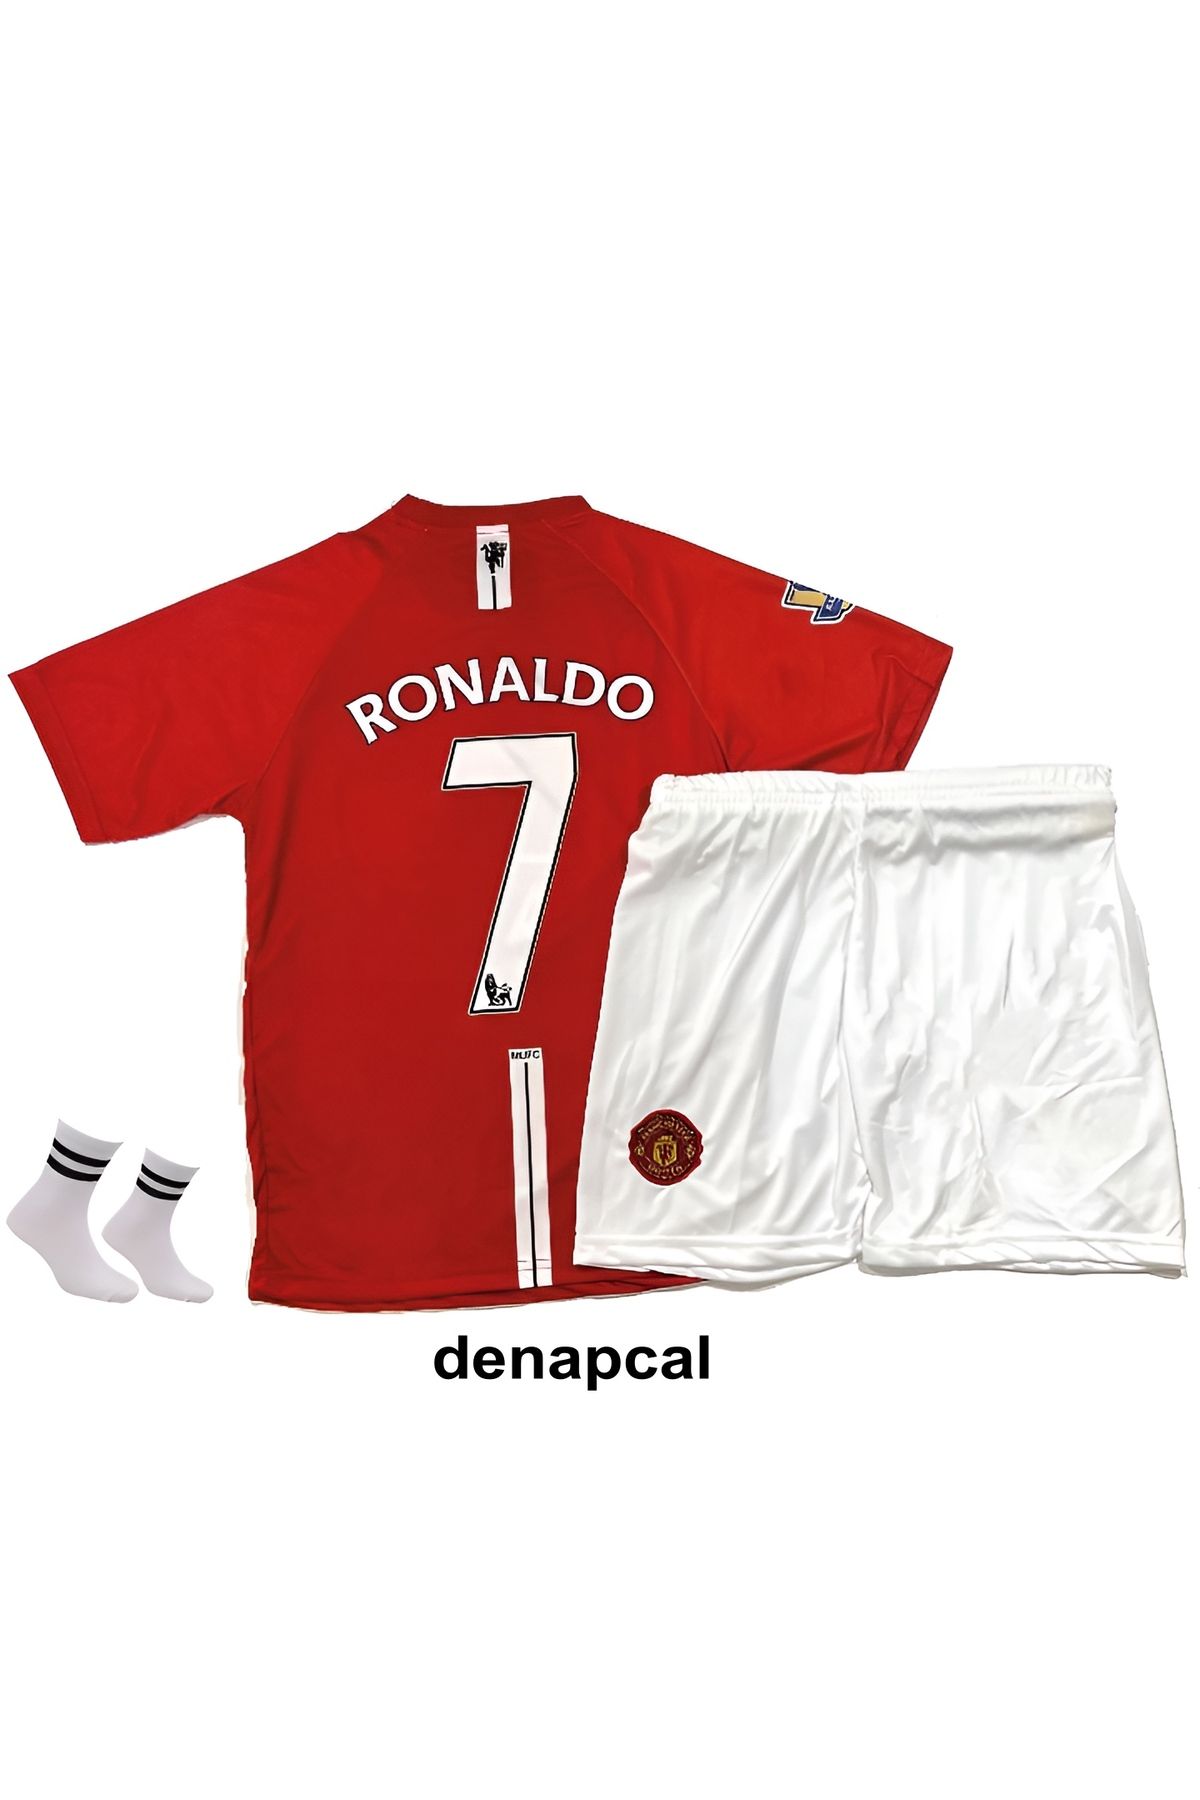 DENAPCAL Ronaldo Retro 2008 Kırmızı Manchester United Moscow Şampiyonlar Ligi Finali 3'lü Çoçuk Forma Seti